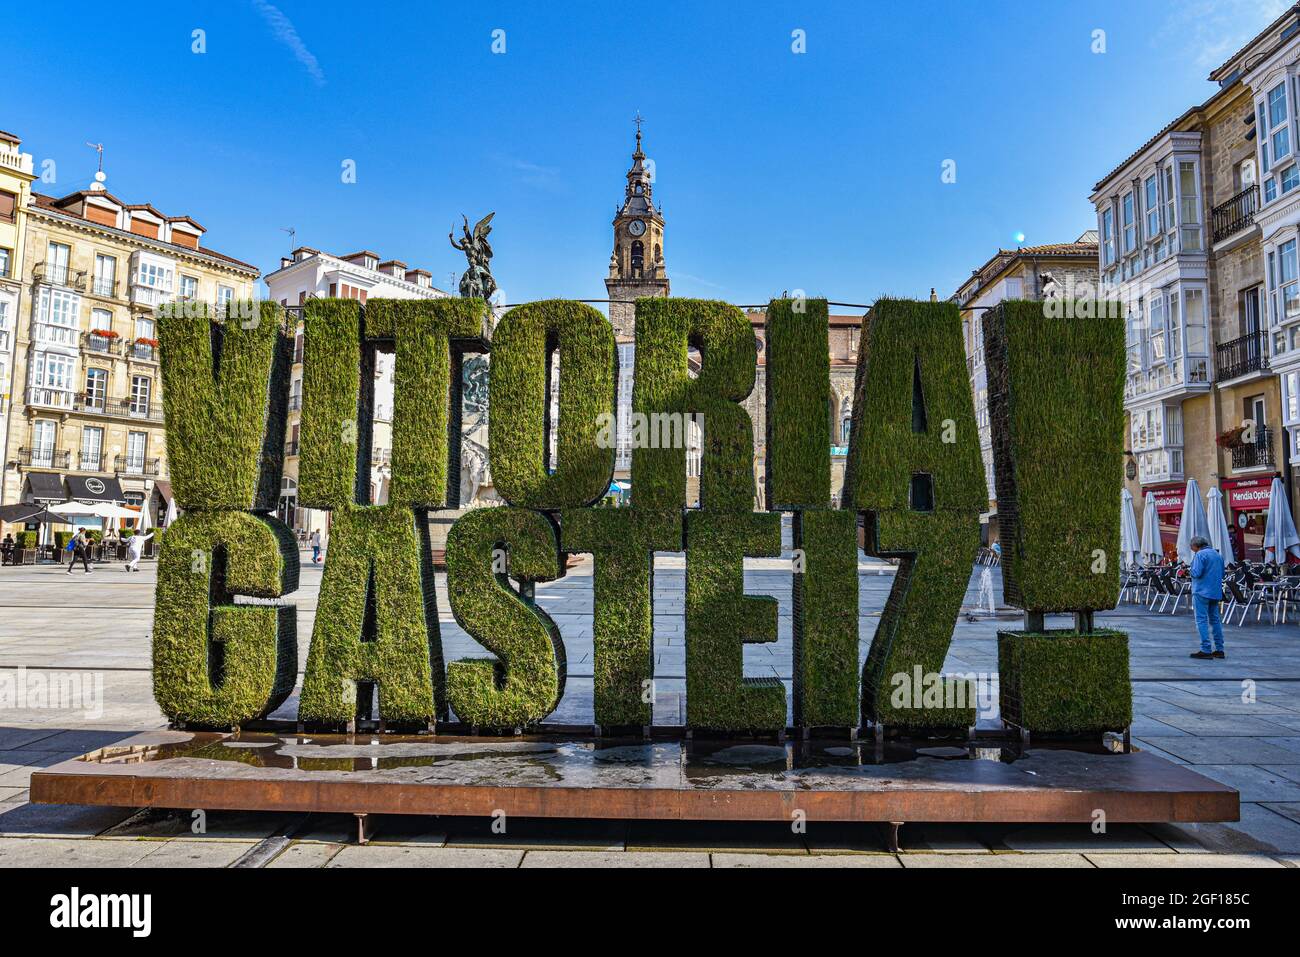 Vitoria Gasteiz, Spagna - 21 ago 2021: Segno floreale Vitoria Gasteiz in Plaza de la Virgen Blanca. Paesi Baschi, Spagna Foto Stock